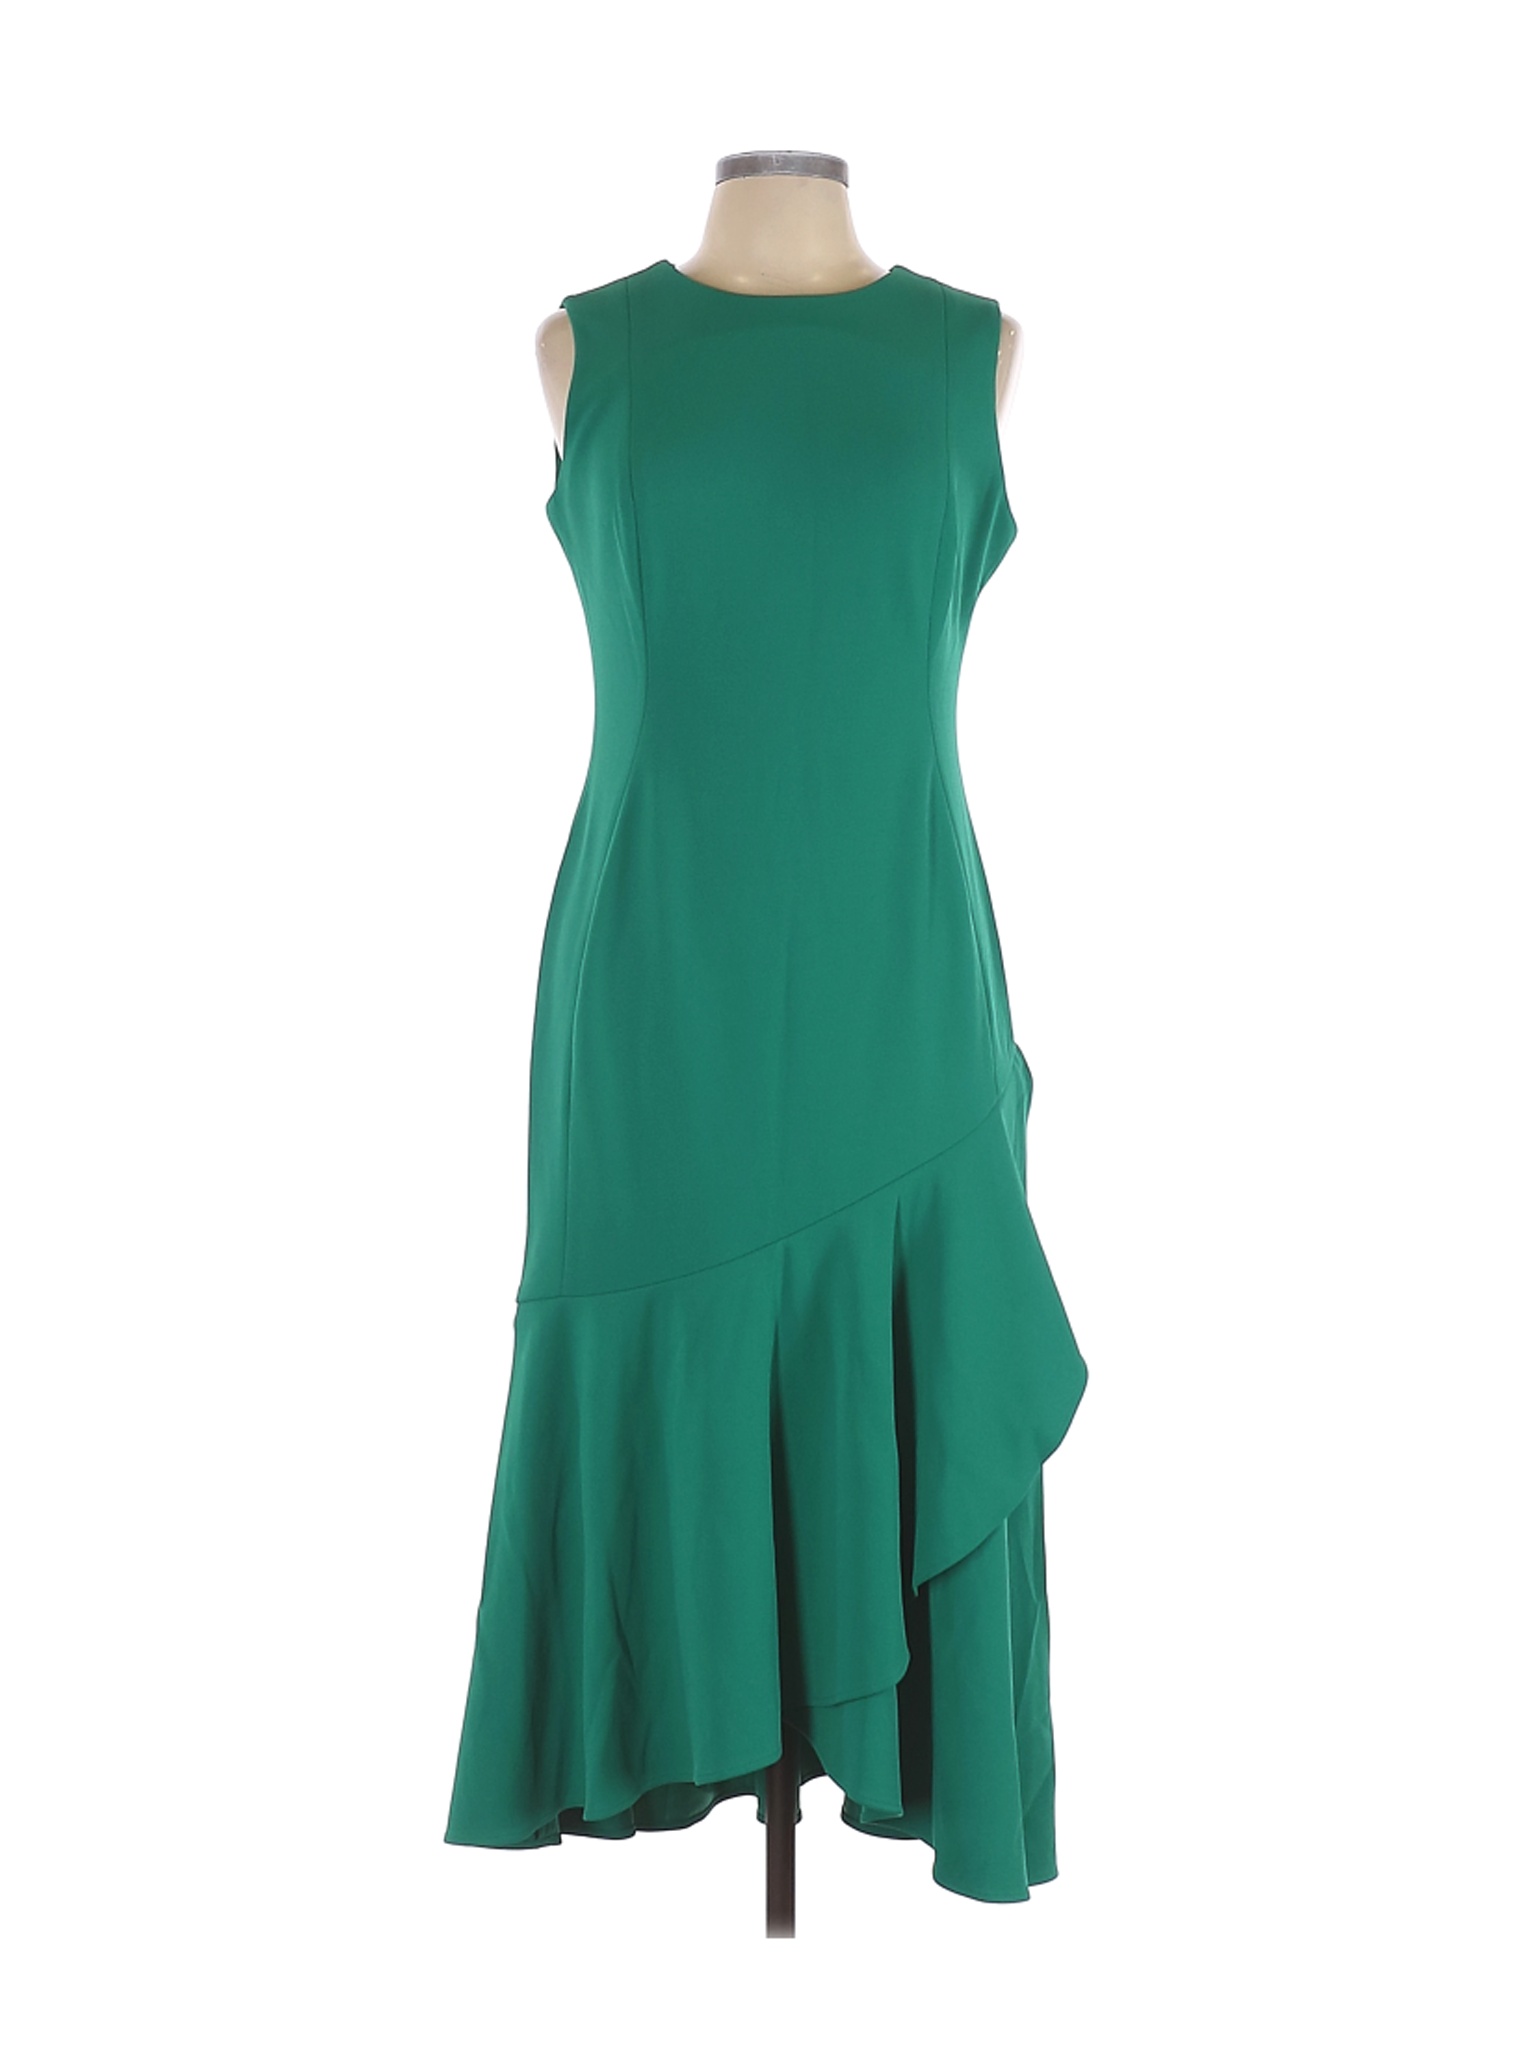 NWT Calvin Klein Women Green Cocktail Dress 10 | eBay